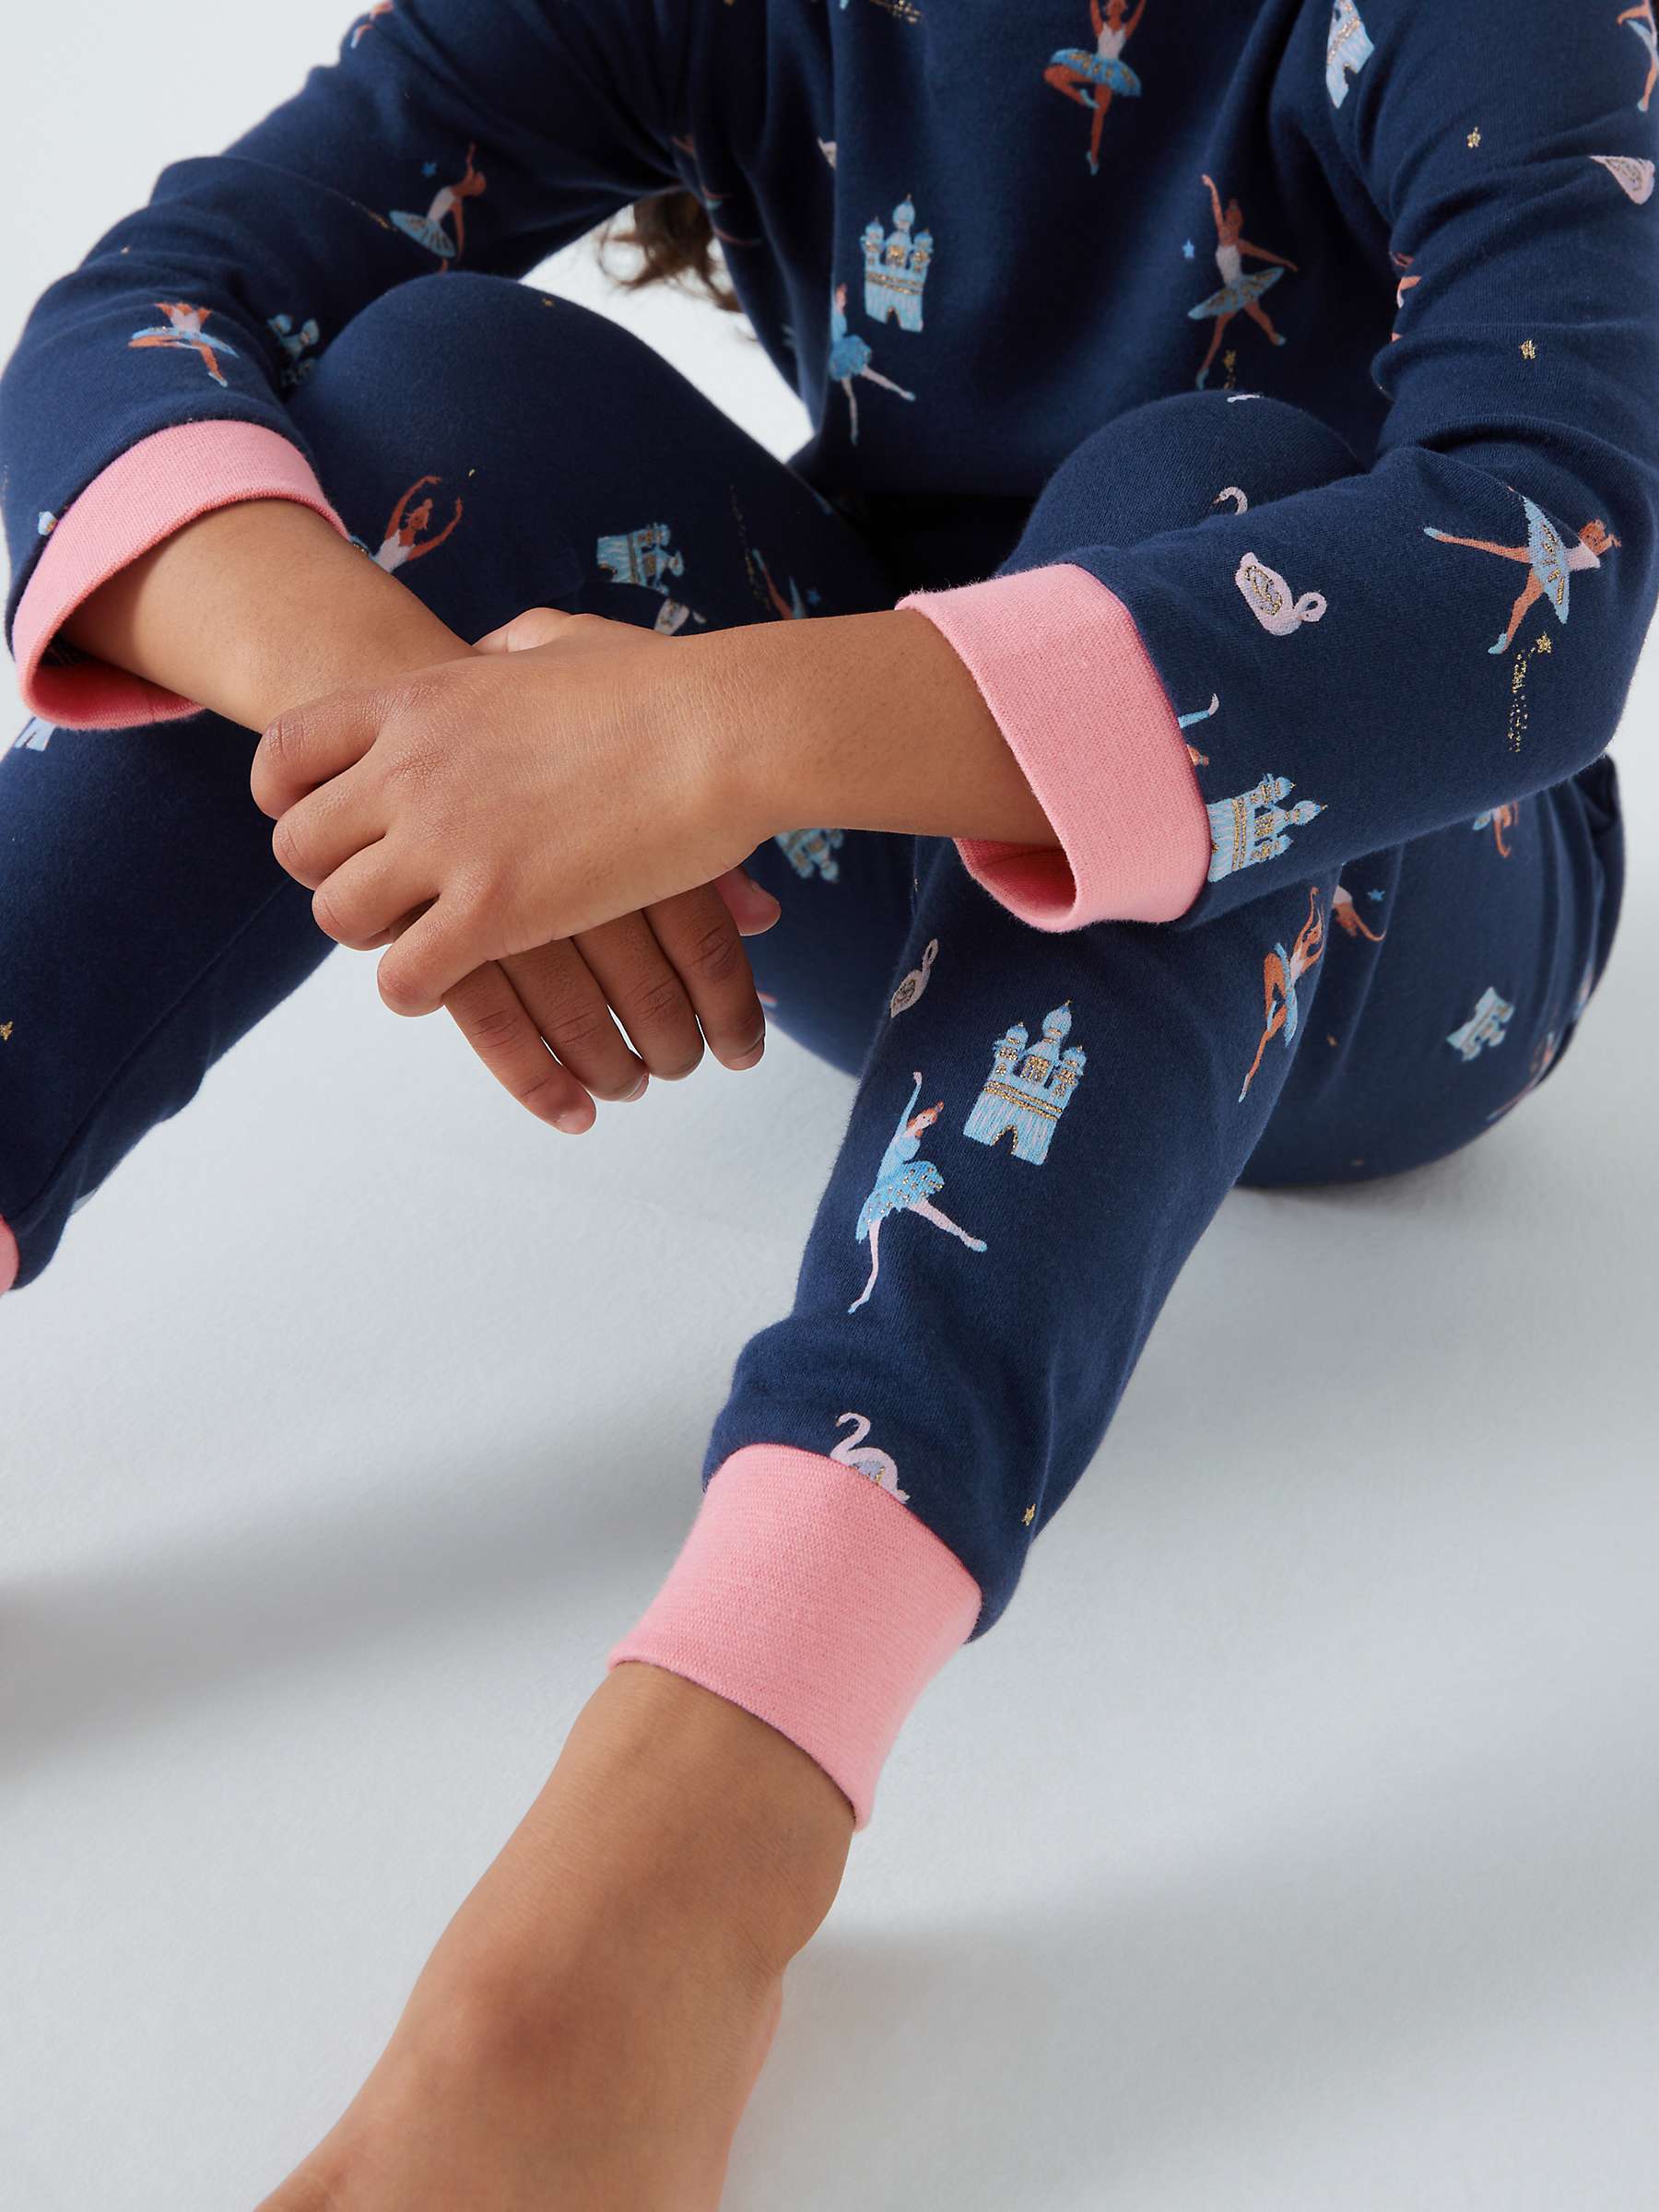 Buy John Lewis Kids' Ballerina Star Pyjamas, Pack of 2, Blue/Multi Online at johnlewis.com